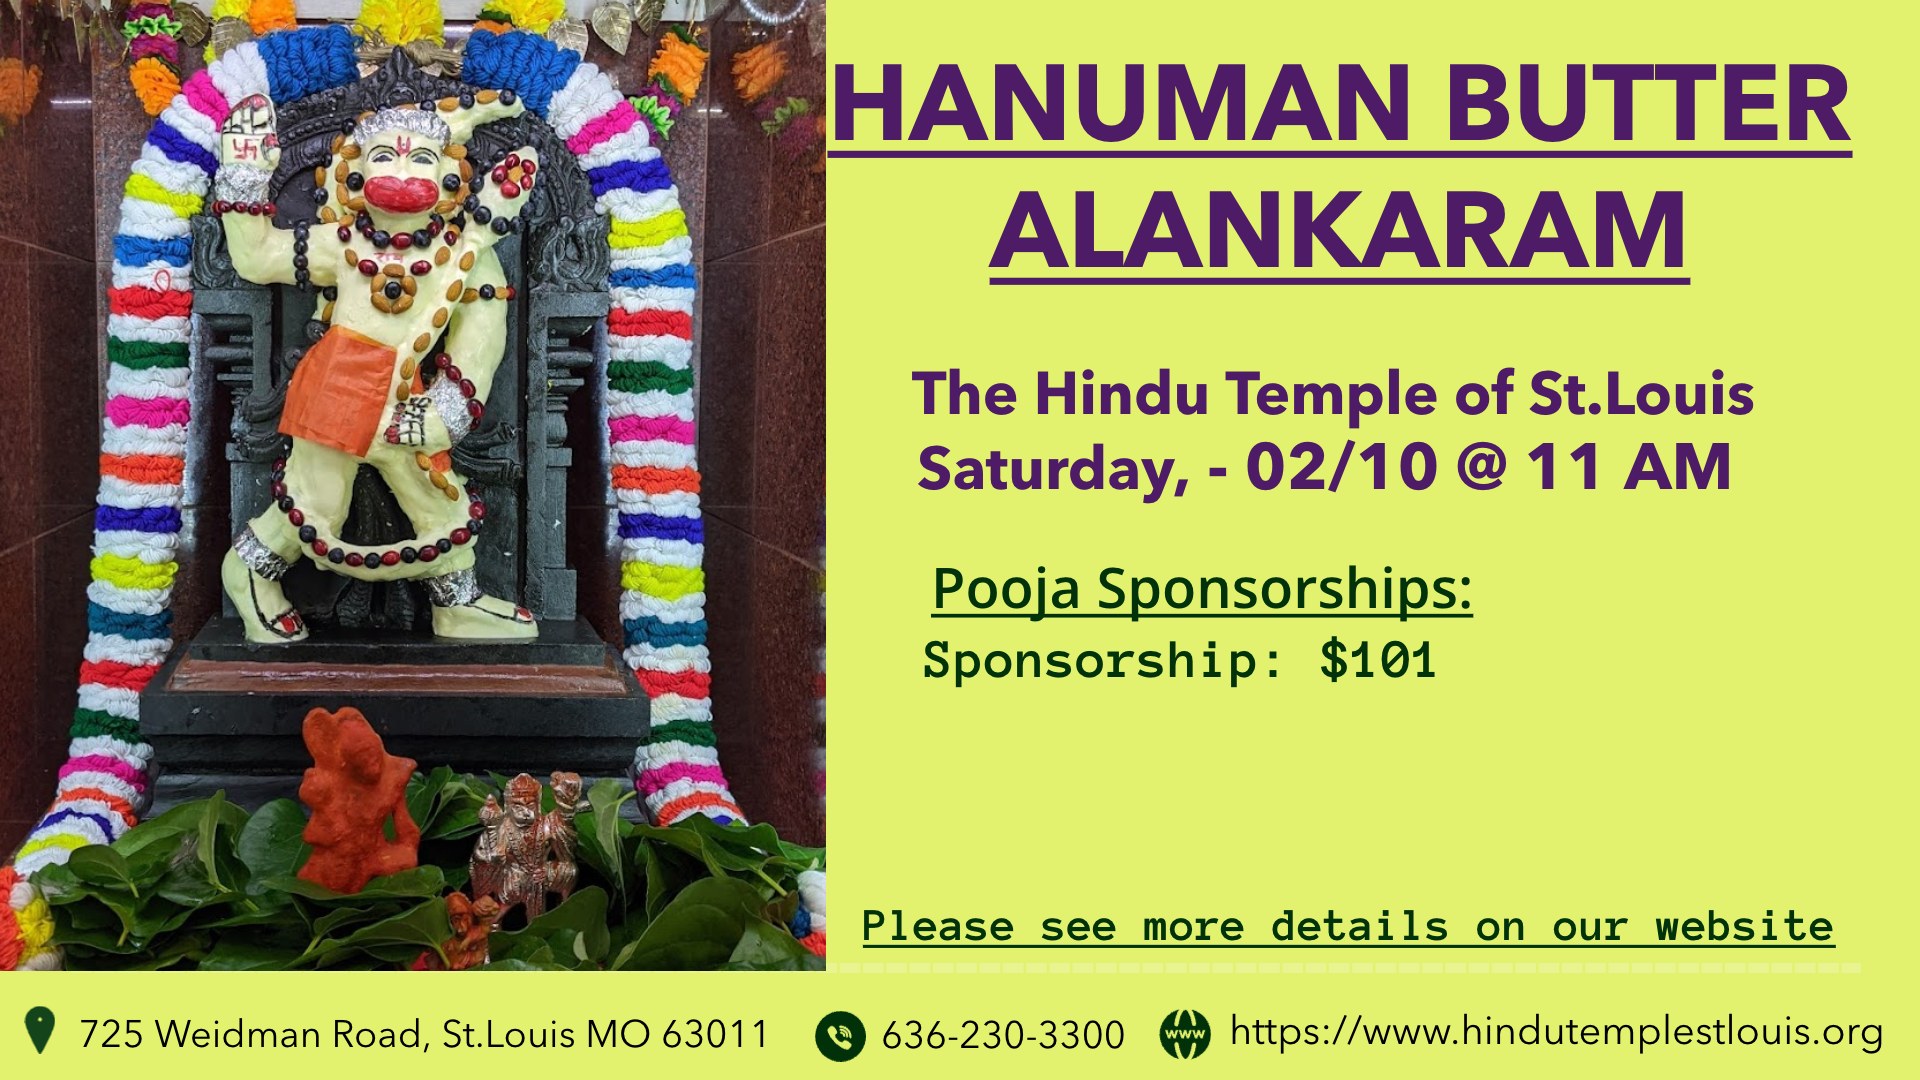 Hanuman Butter Alankaram Sponsorship